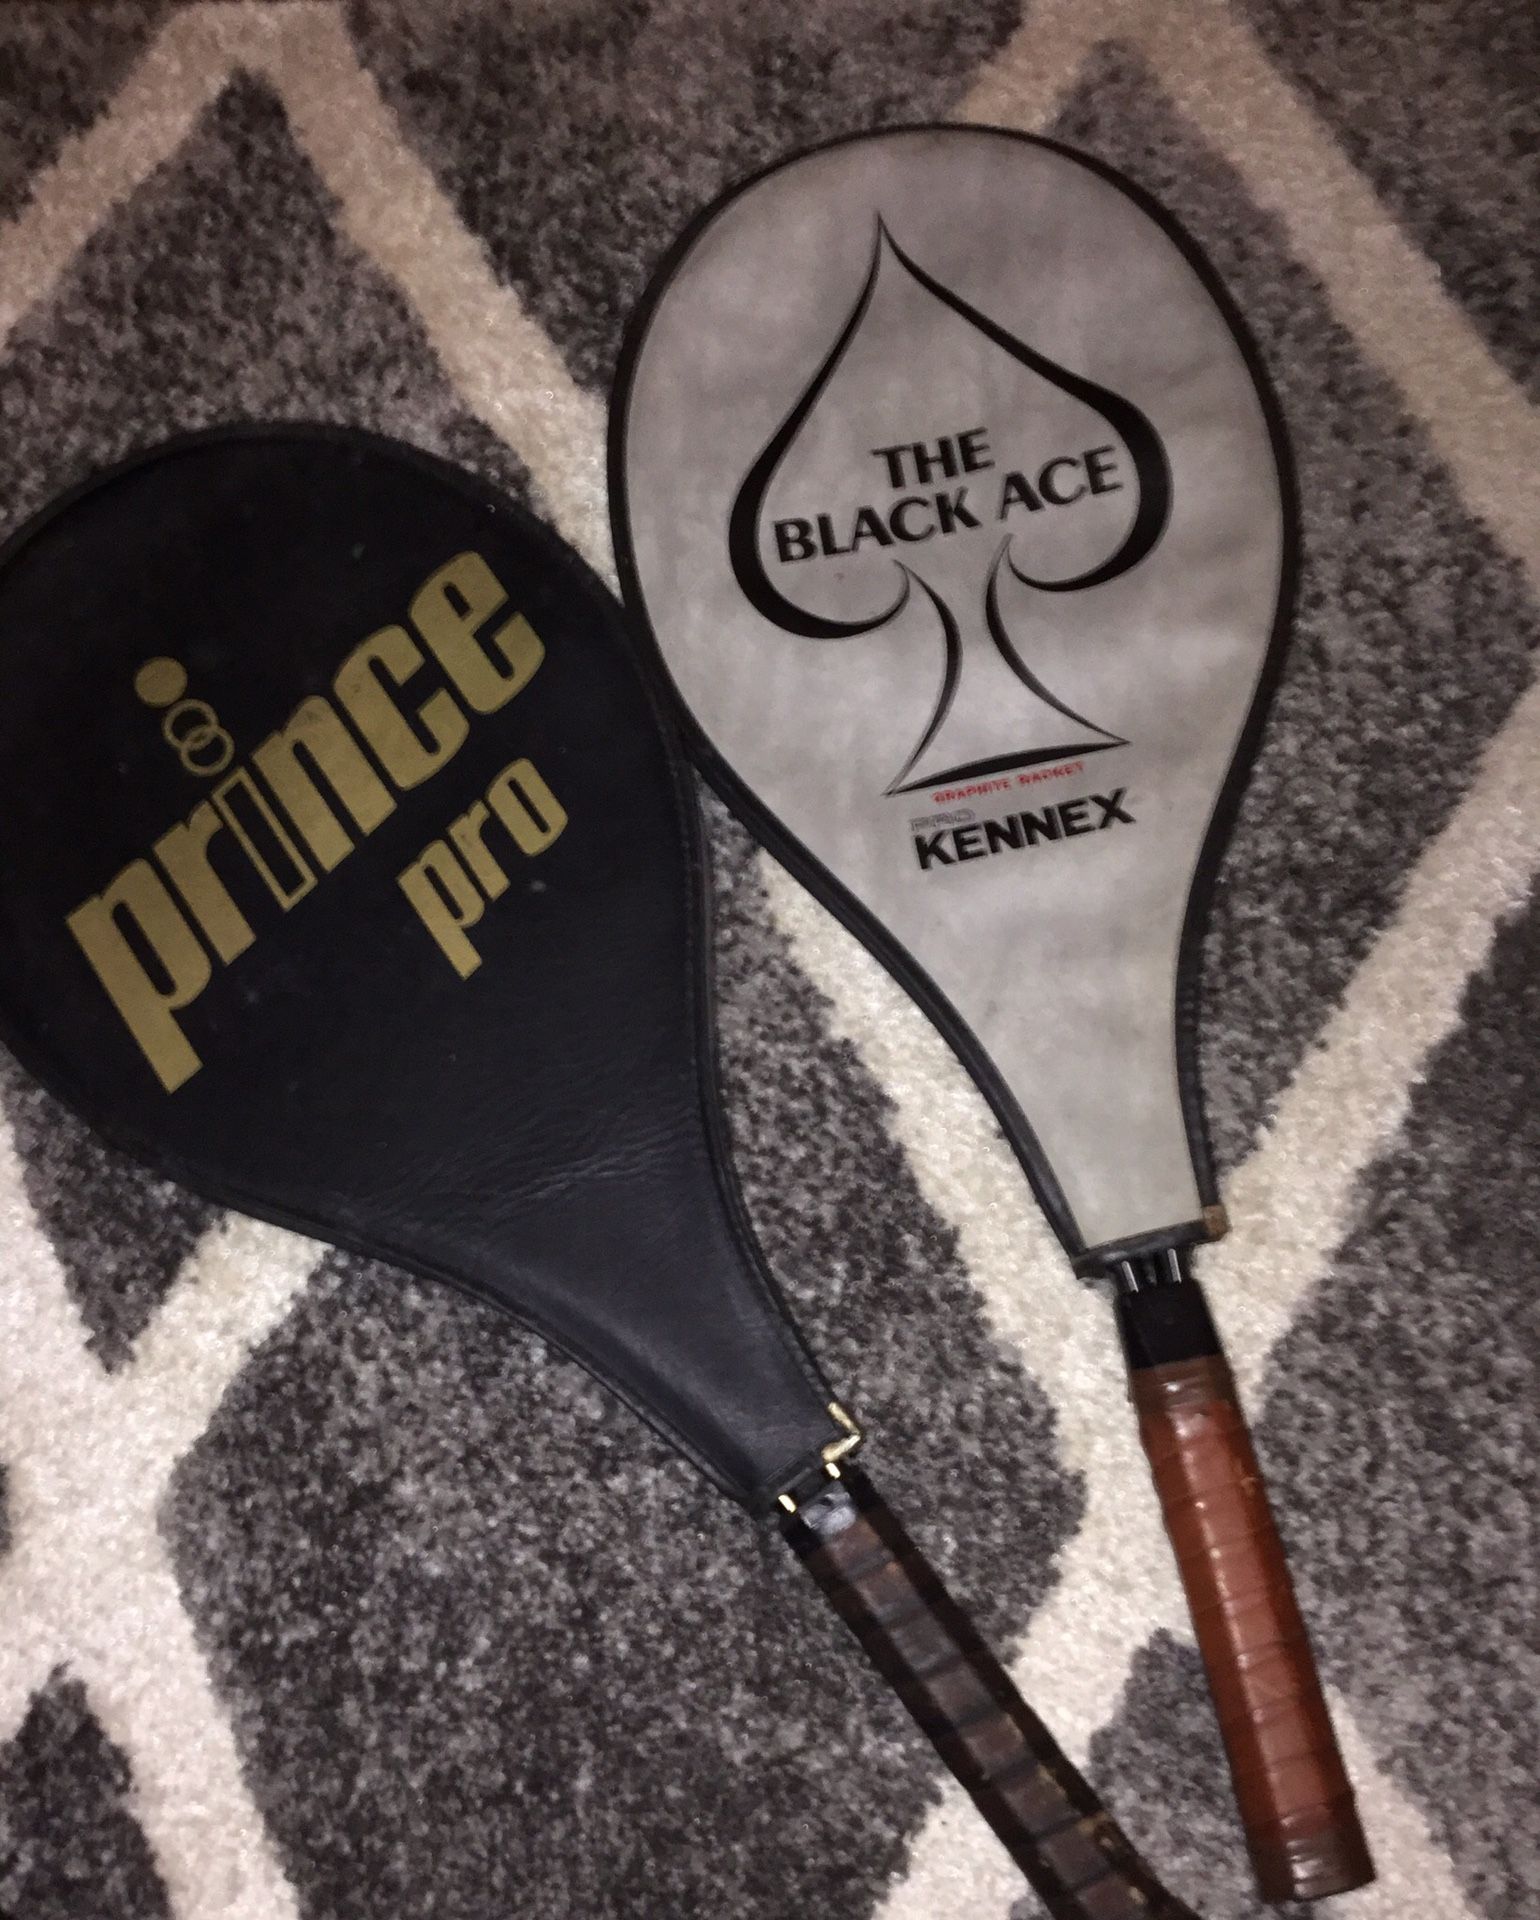 Set of 2 tennis rackets, prince pro, kennex black ace